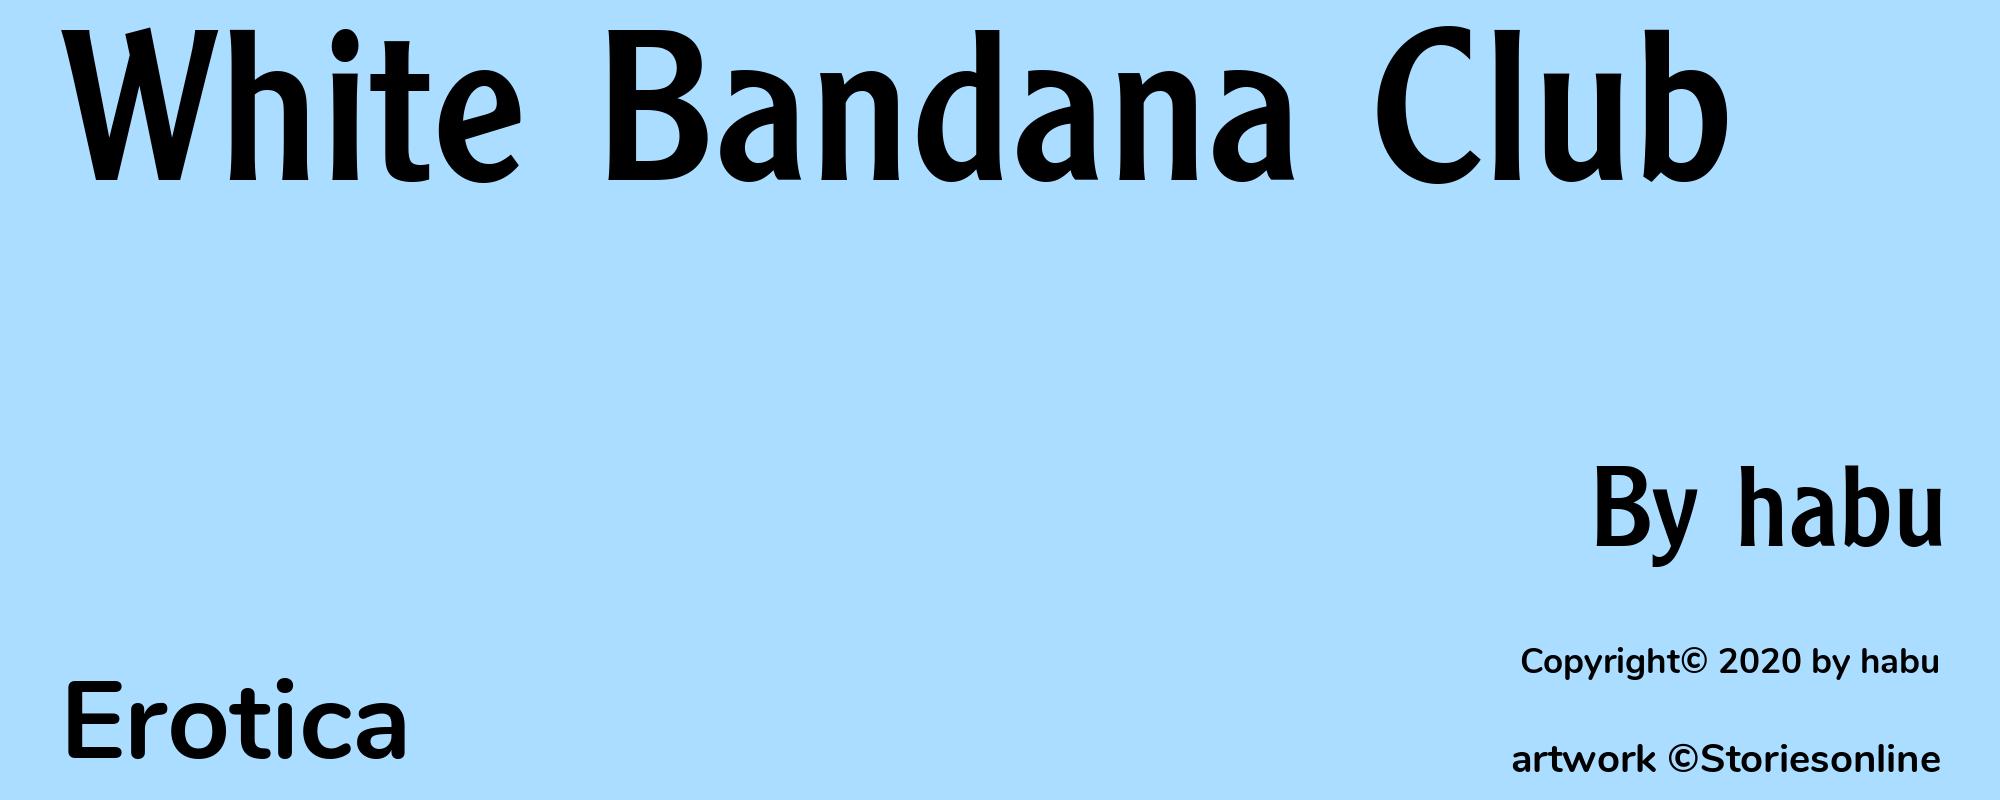 White Bandana Club - Cover